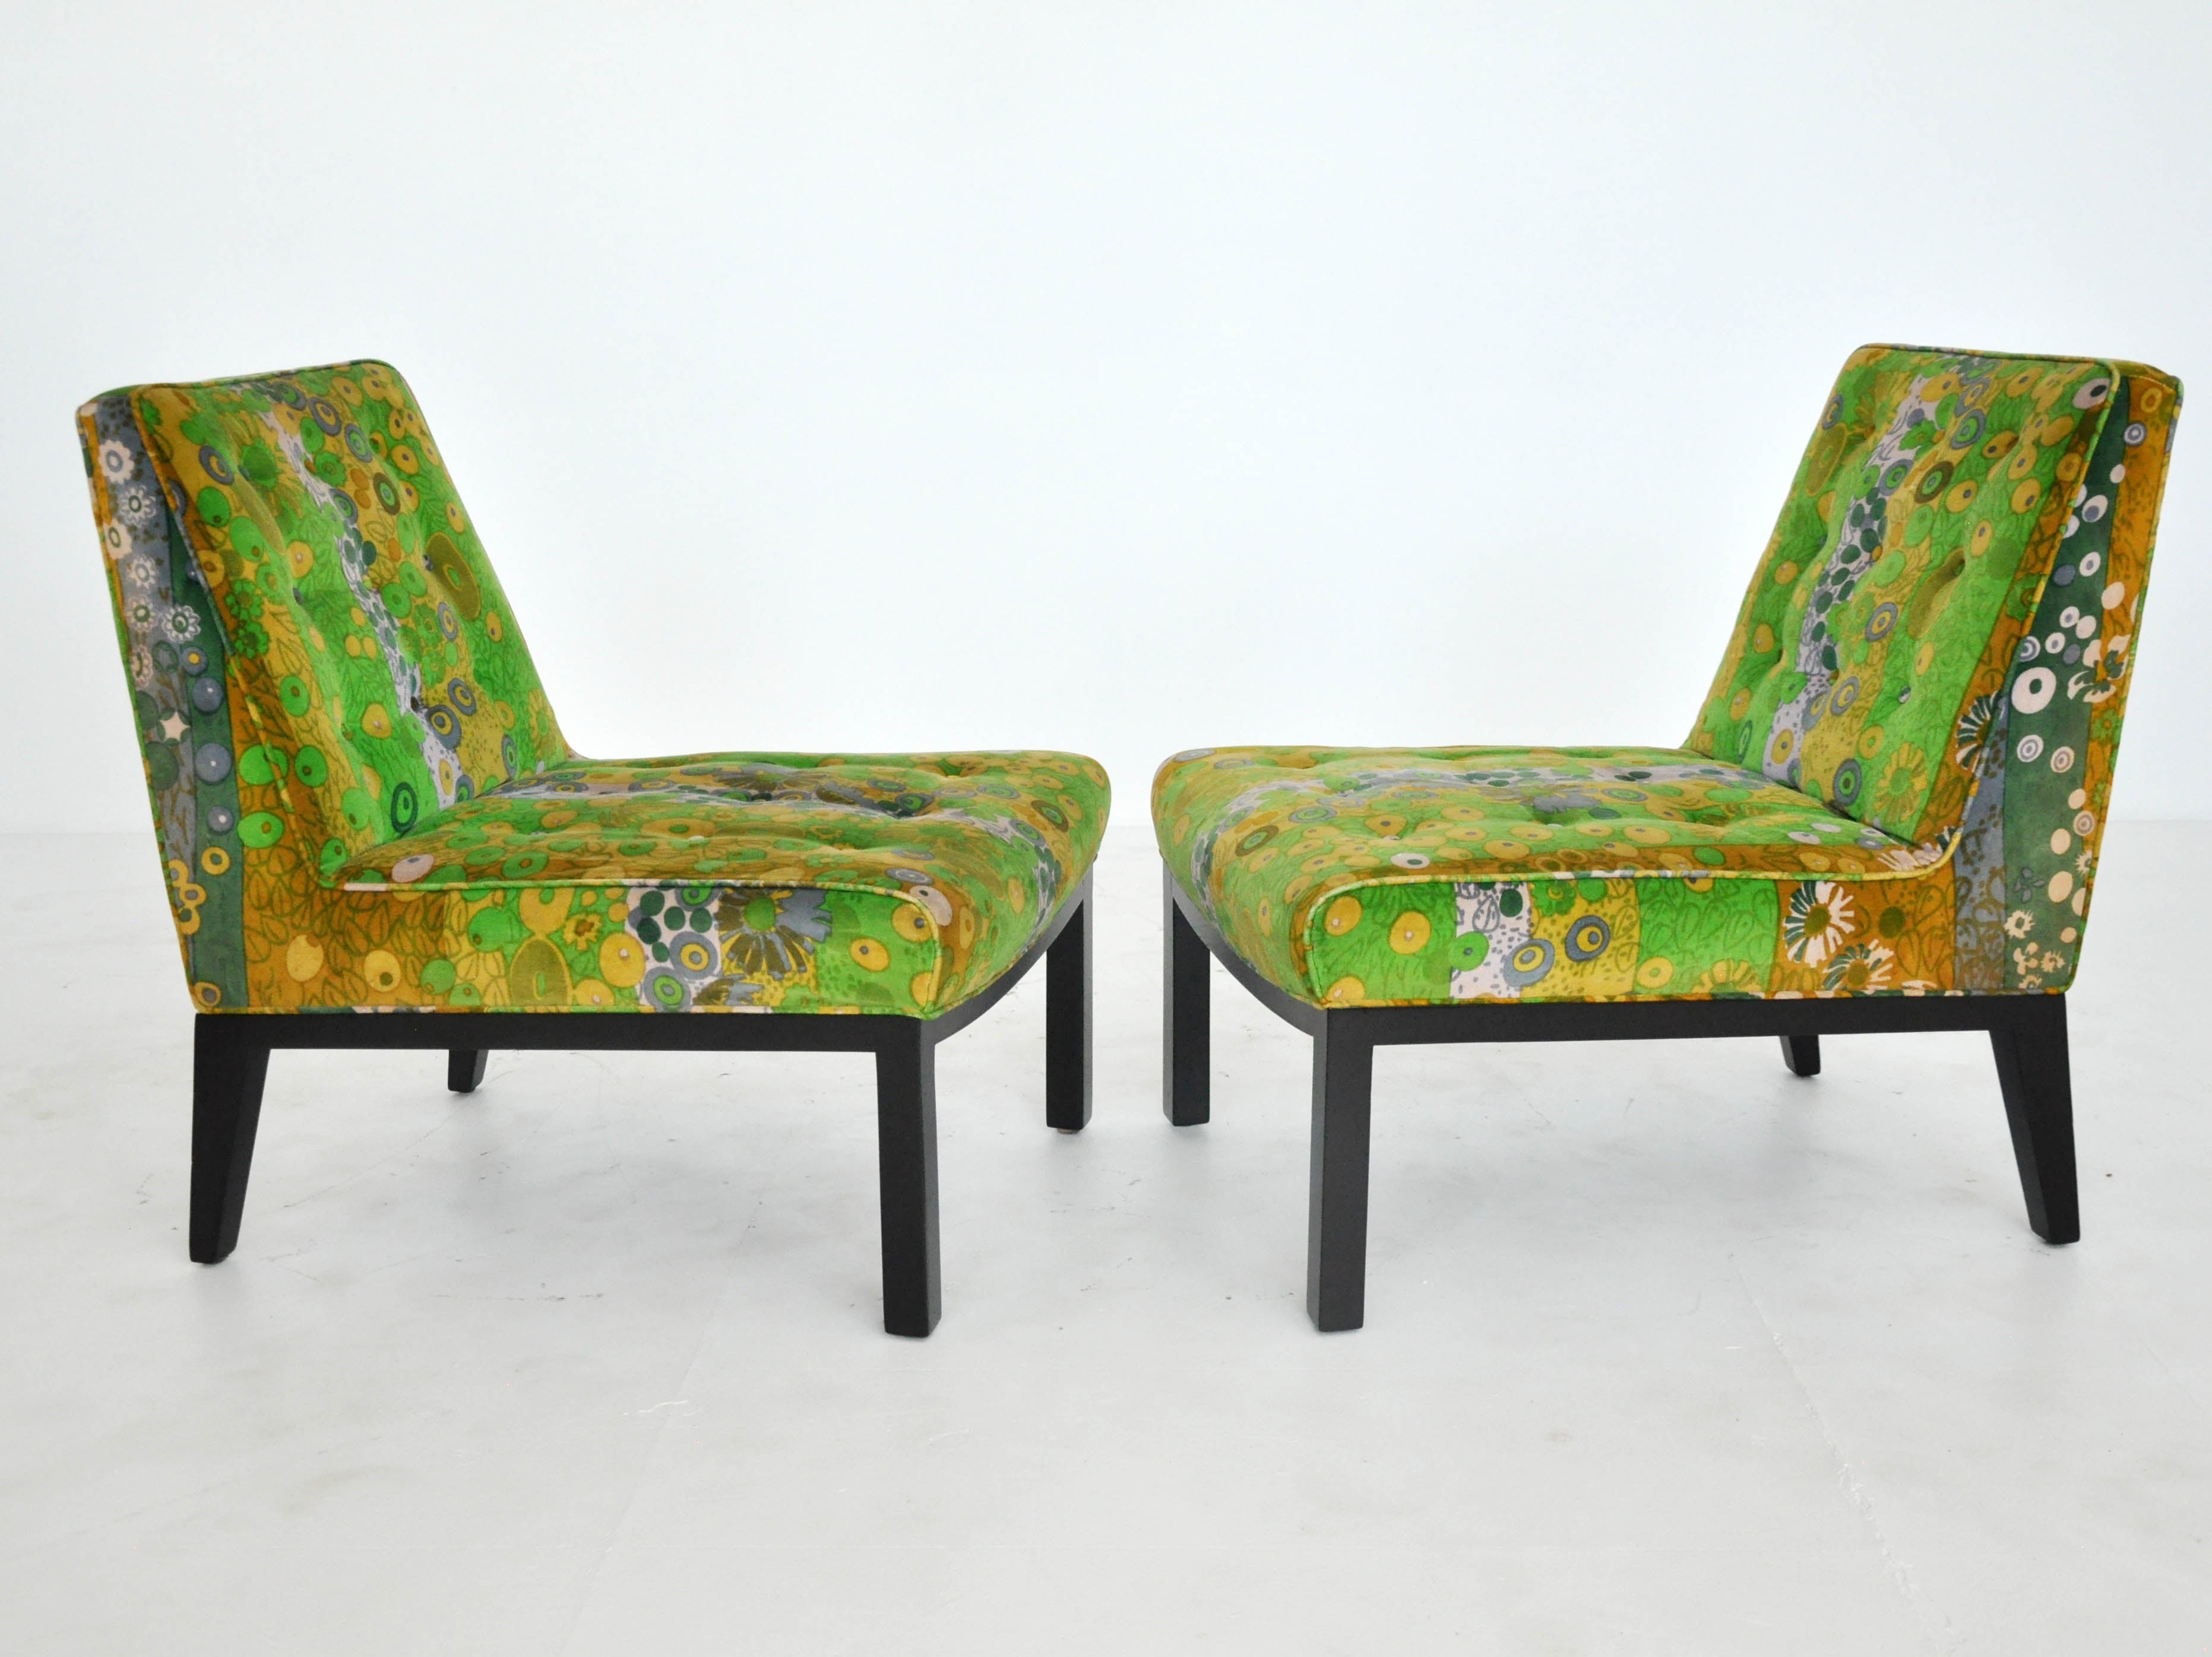 Slipper Chairs by Edward Wormley for Dunbar